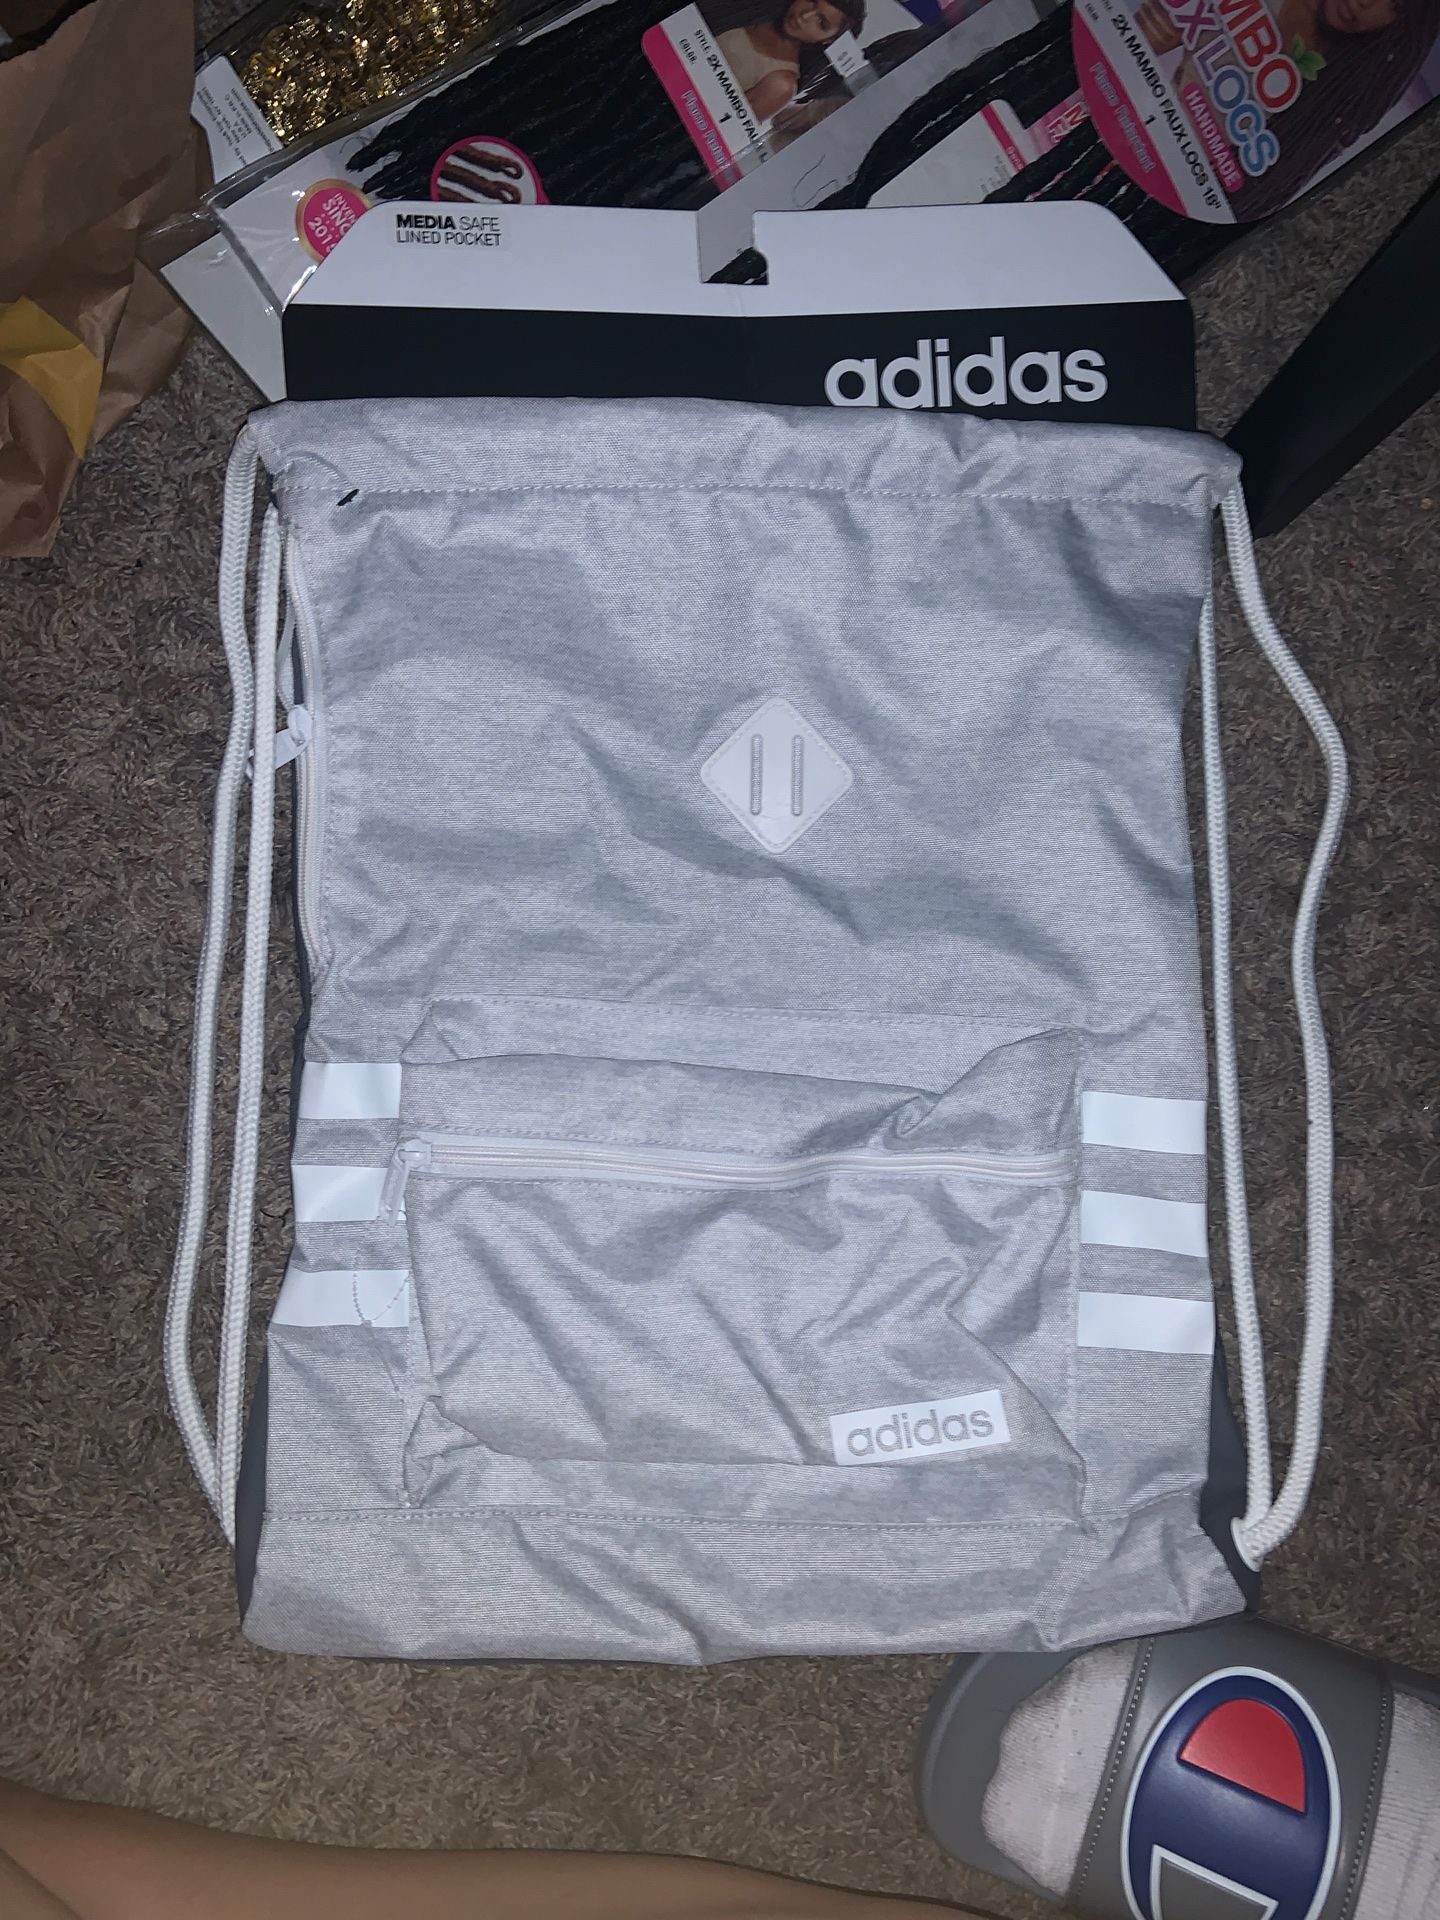 Adidas jaw string bag